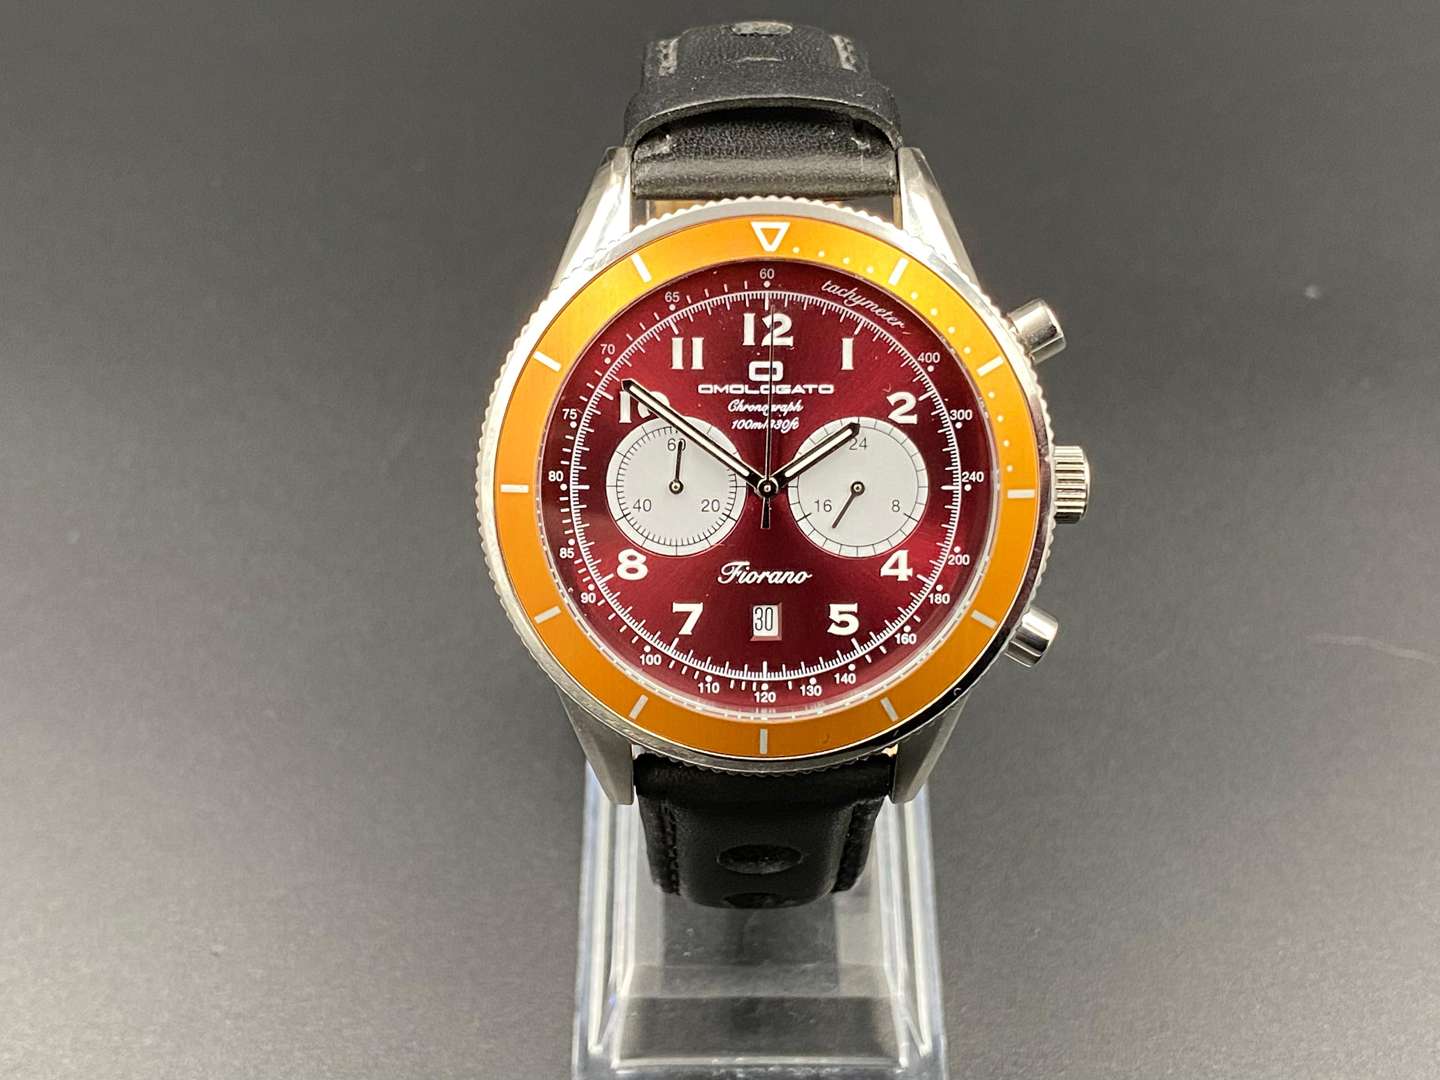 <p>OMOLOGATO, “Fiorano”, stainless steel, quartz, chronograph wristwatch,&nbsp;</p>